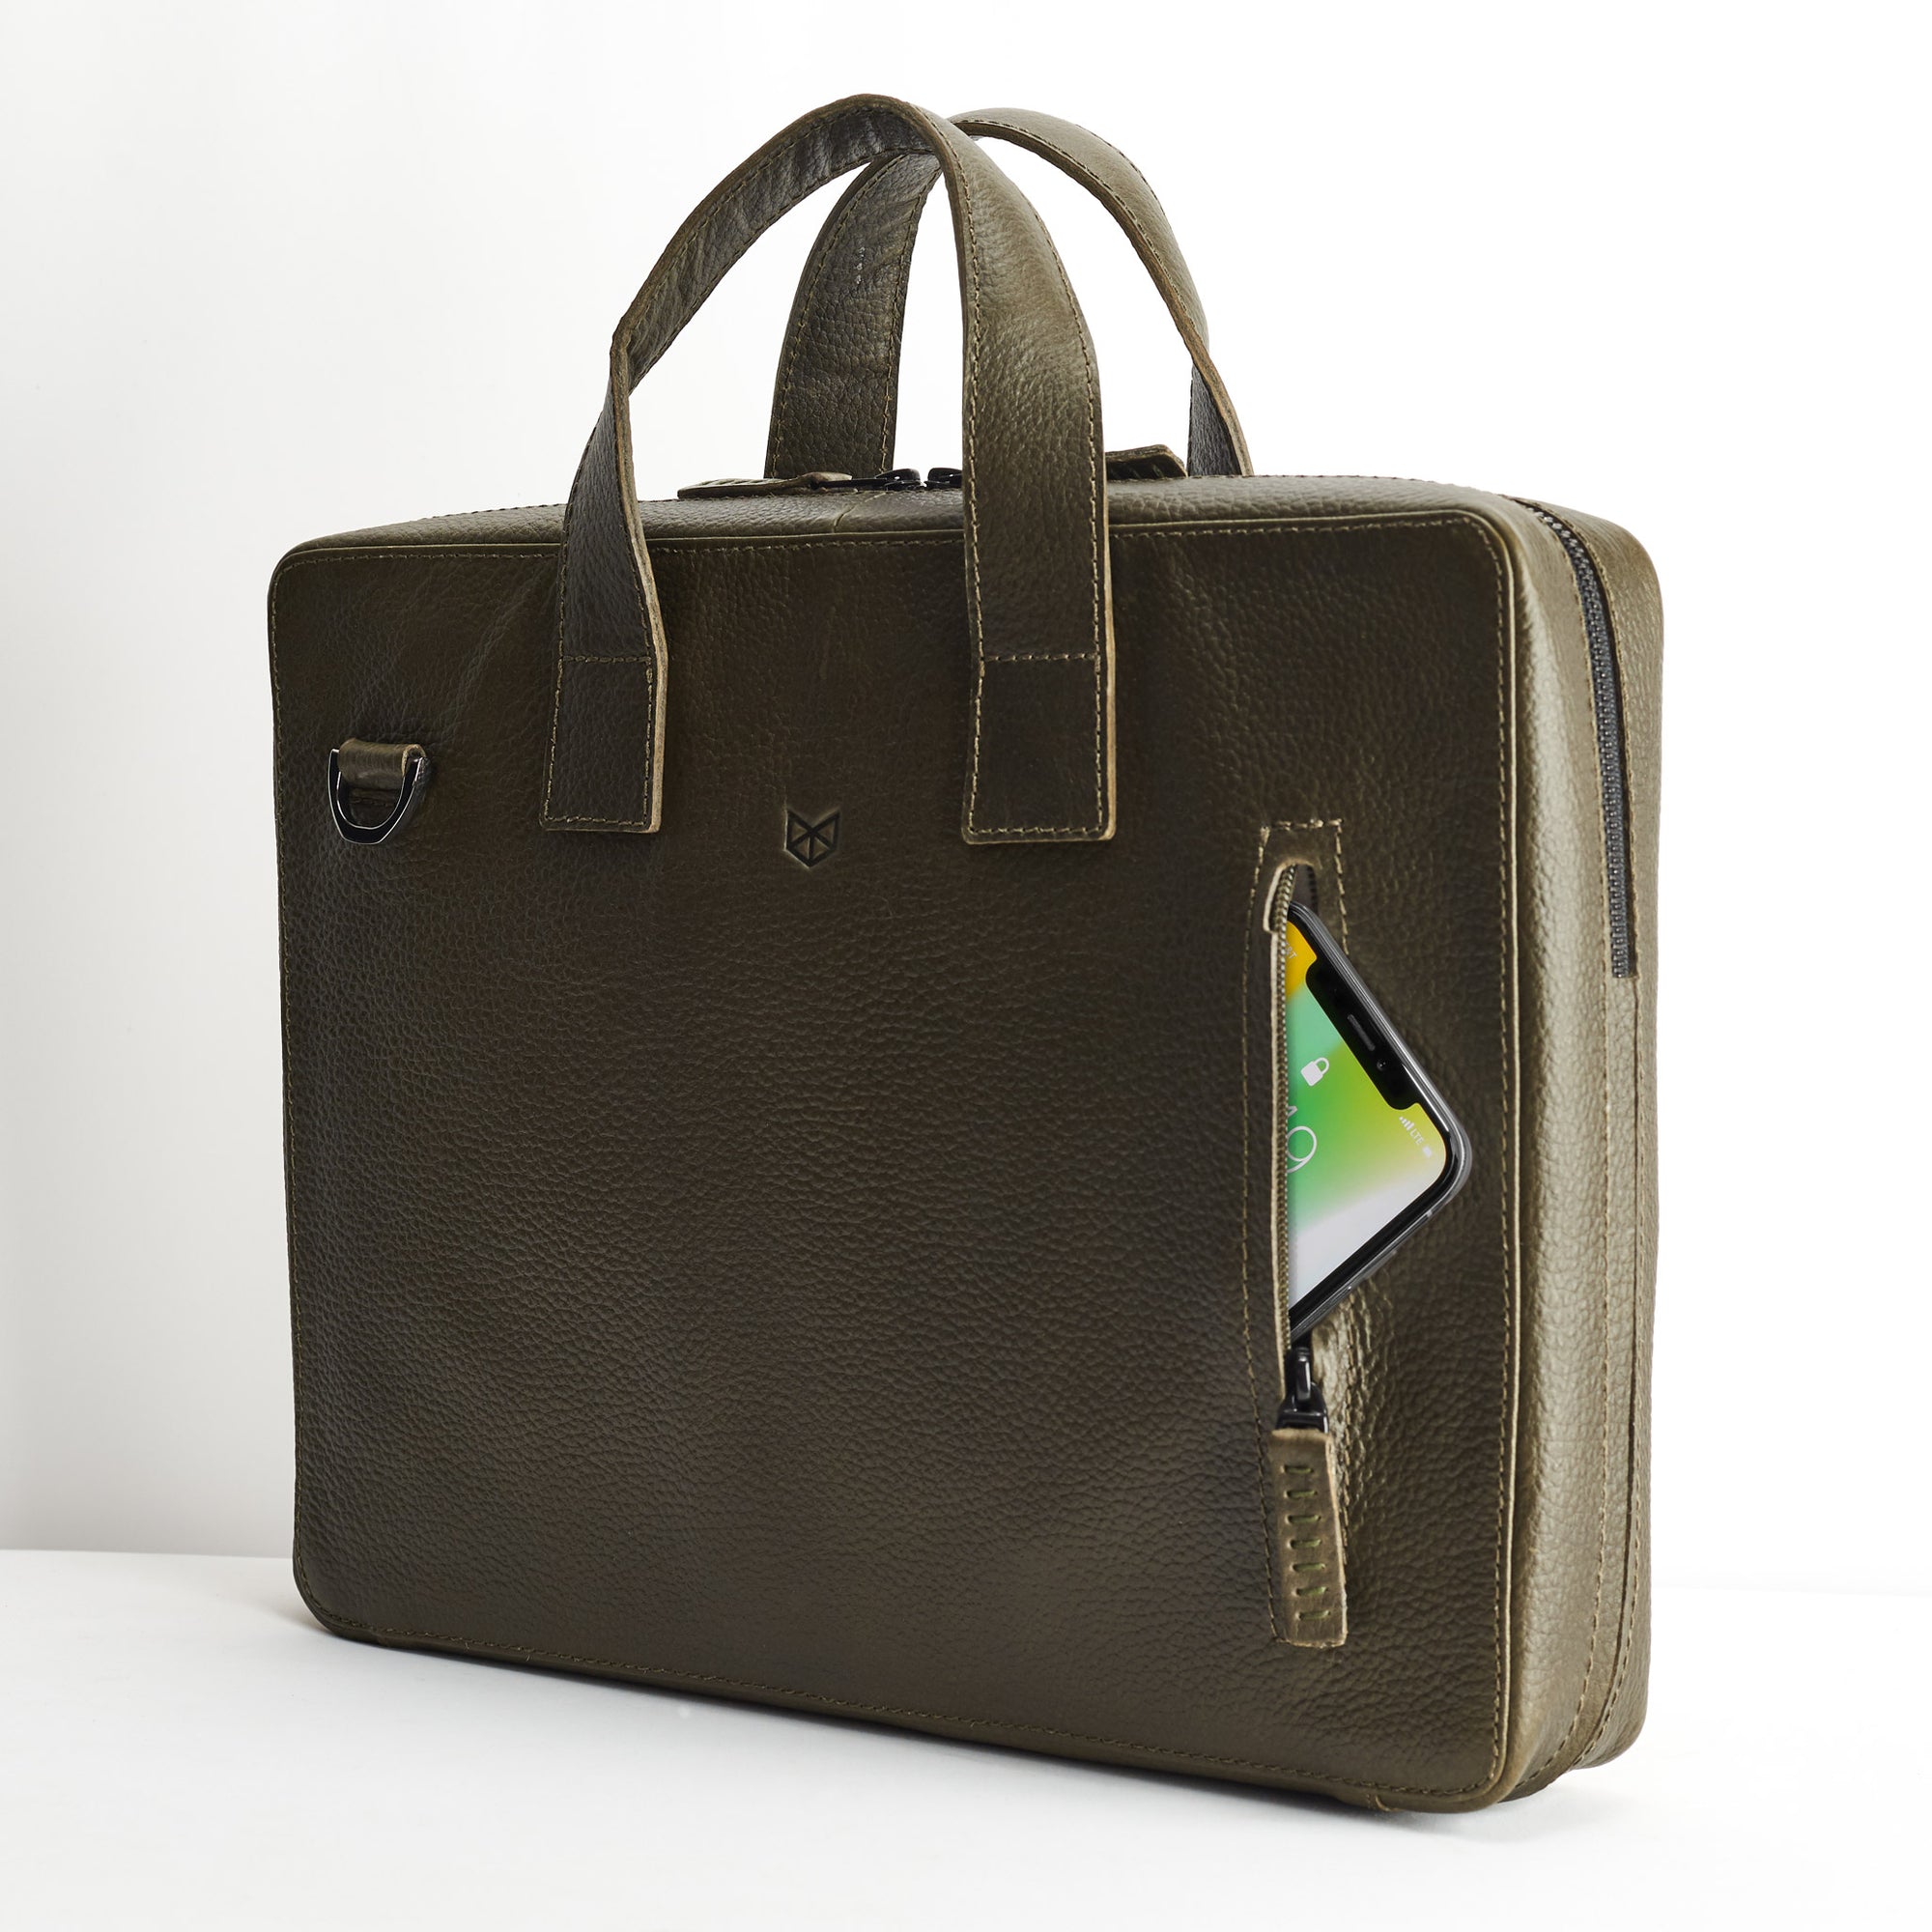 Green soft slim workbag for mens gifts 